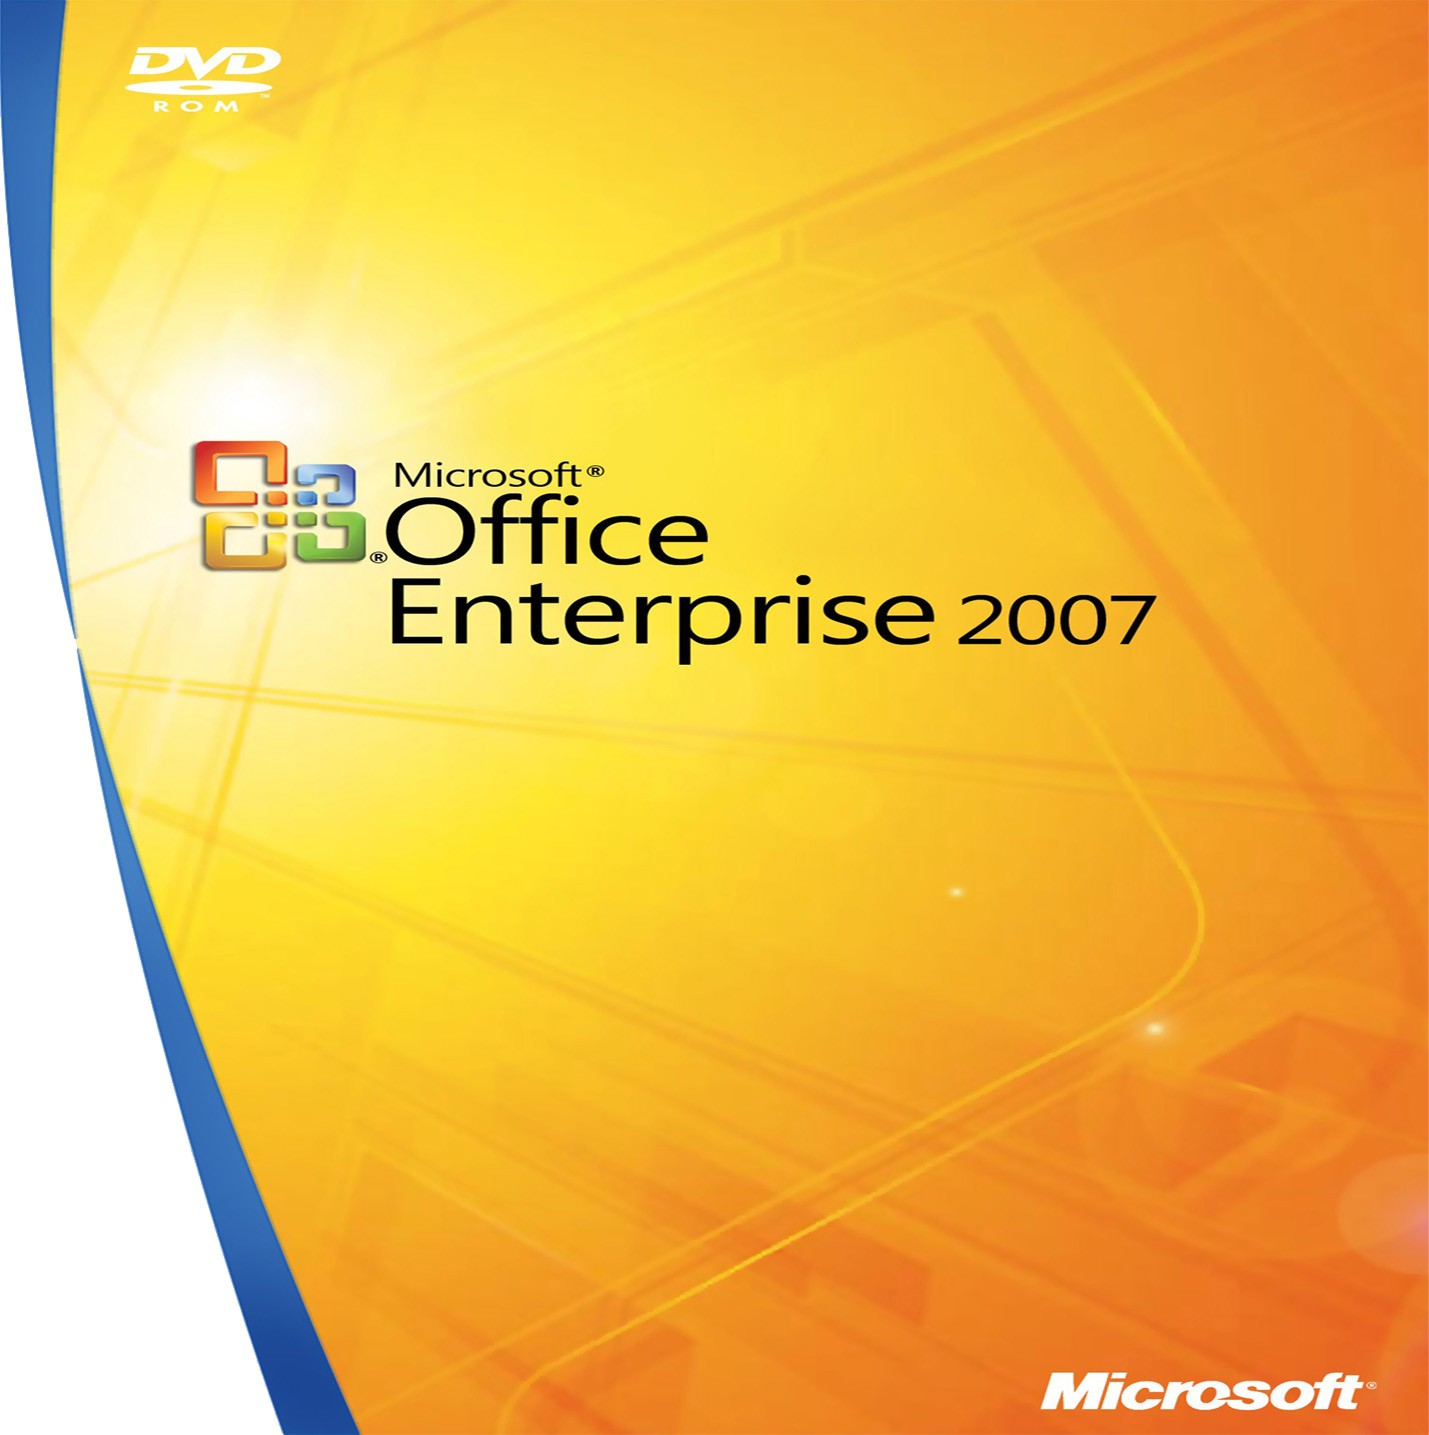 Belajar Microsoft Excel 2010 Pdf